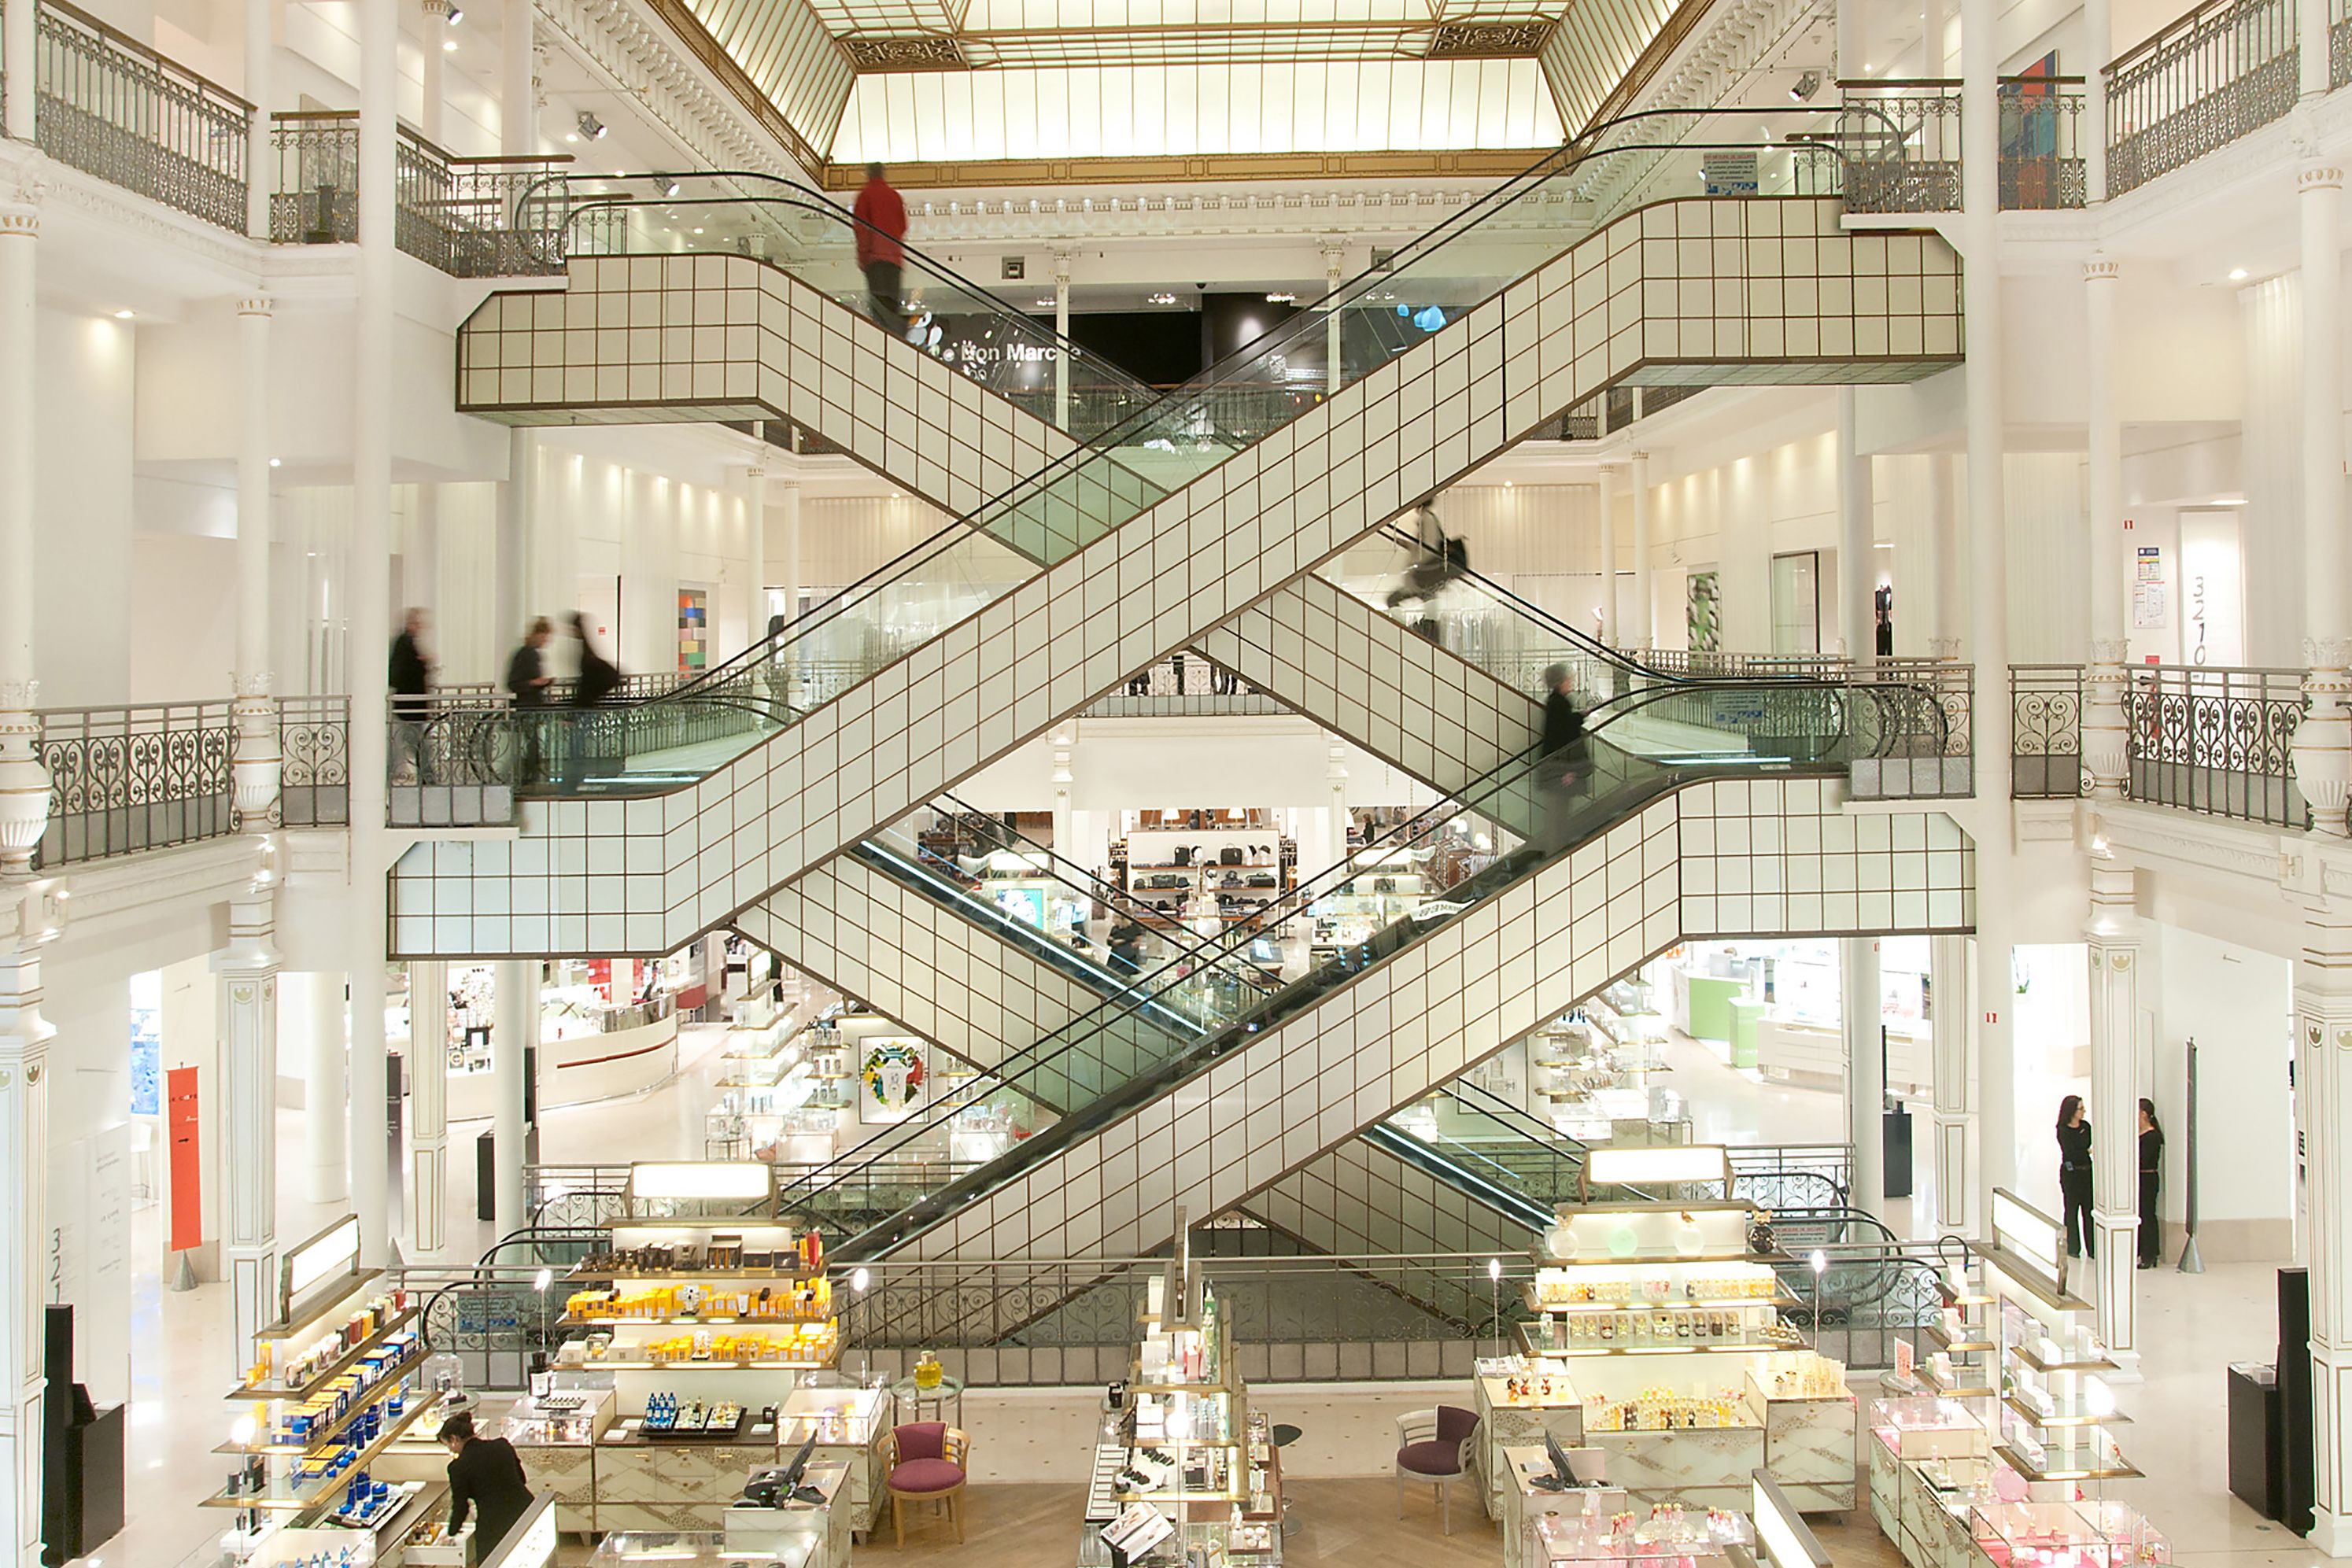 ozon For en dagstur Tutor Le Bon Marché: World's oldest department store revolutionized shopping | CNN